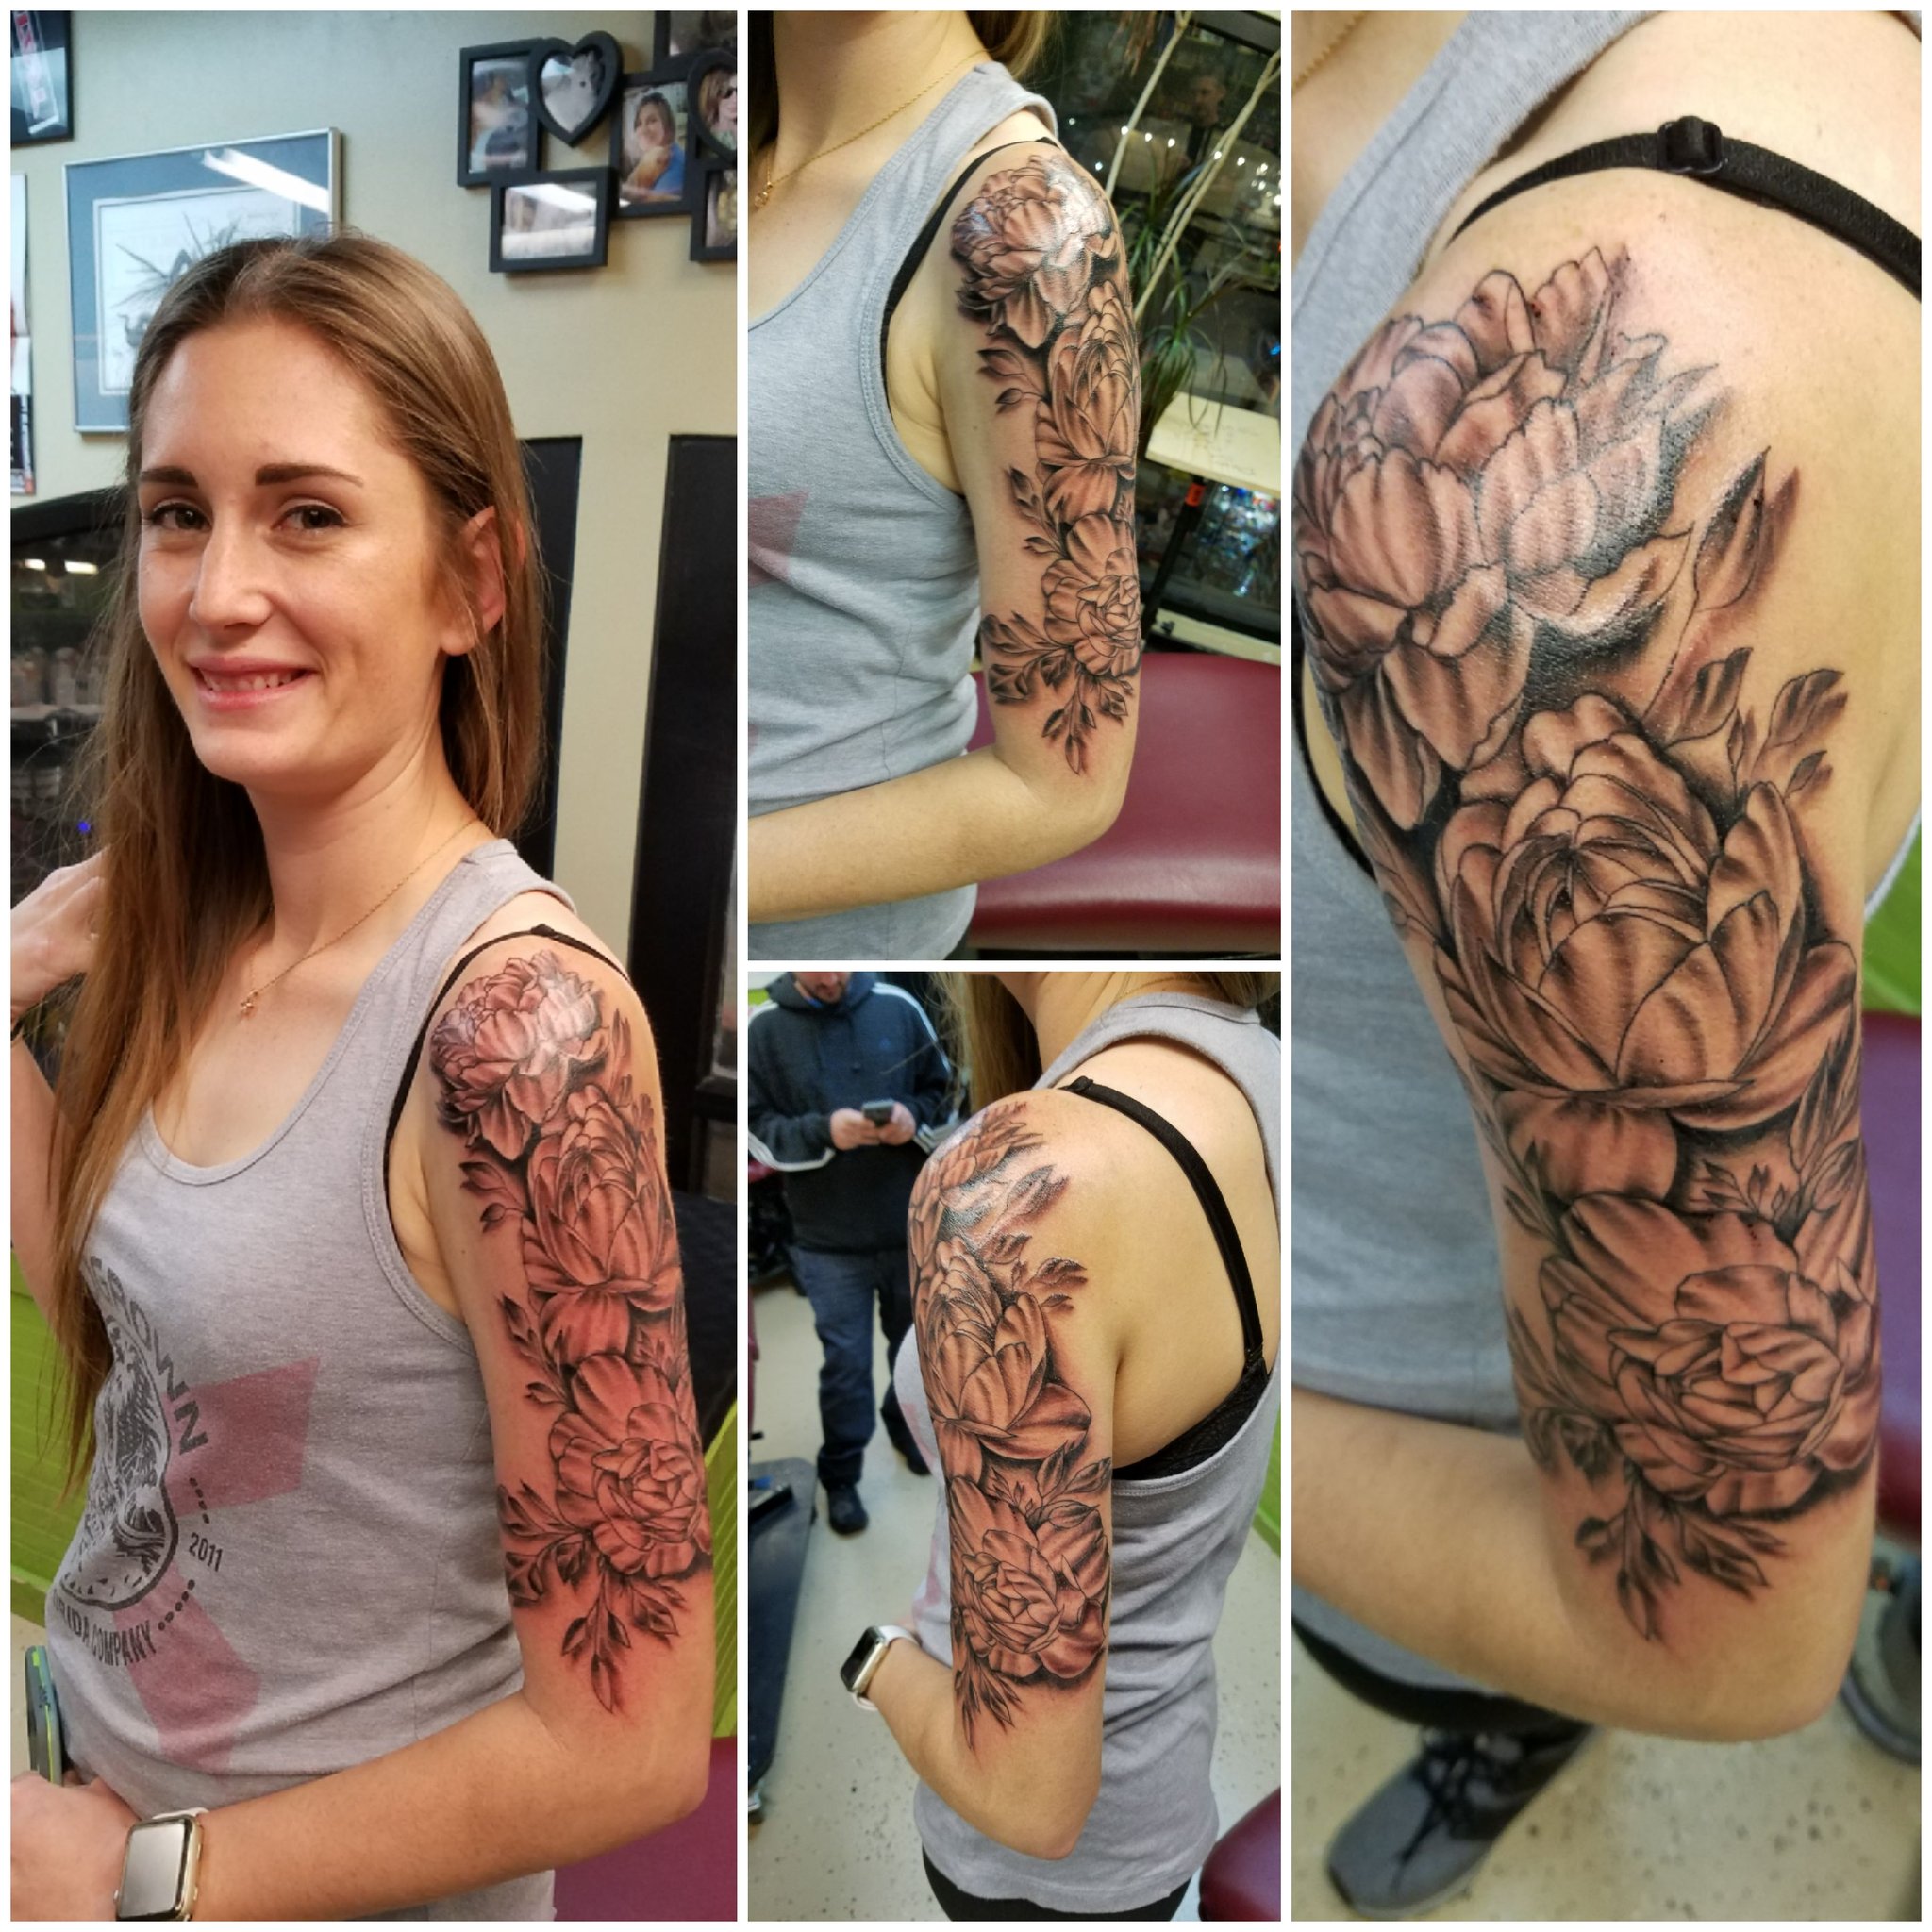 Tattoos by Jeff Ziozios on X: Elephant Patch tattoo tiger tattoo flower  tattoo tribal tattoo by Jeffrey Ziozios at Bay City Tattoos Tampa Florida  #ink #inked #inkedup #tampa #ybor #yborcity #tattoosbyjeffziozios  #baycitytattoos #